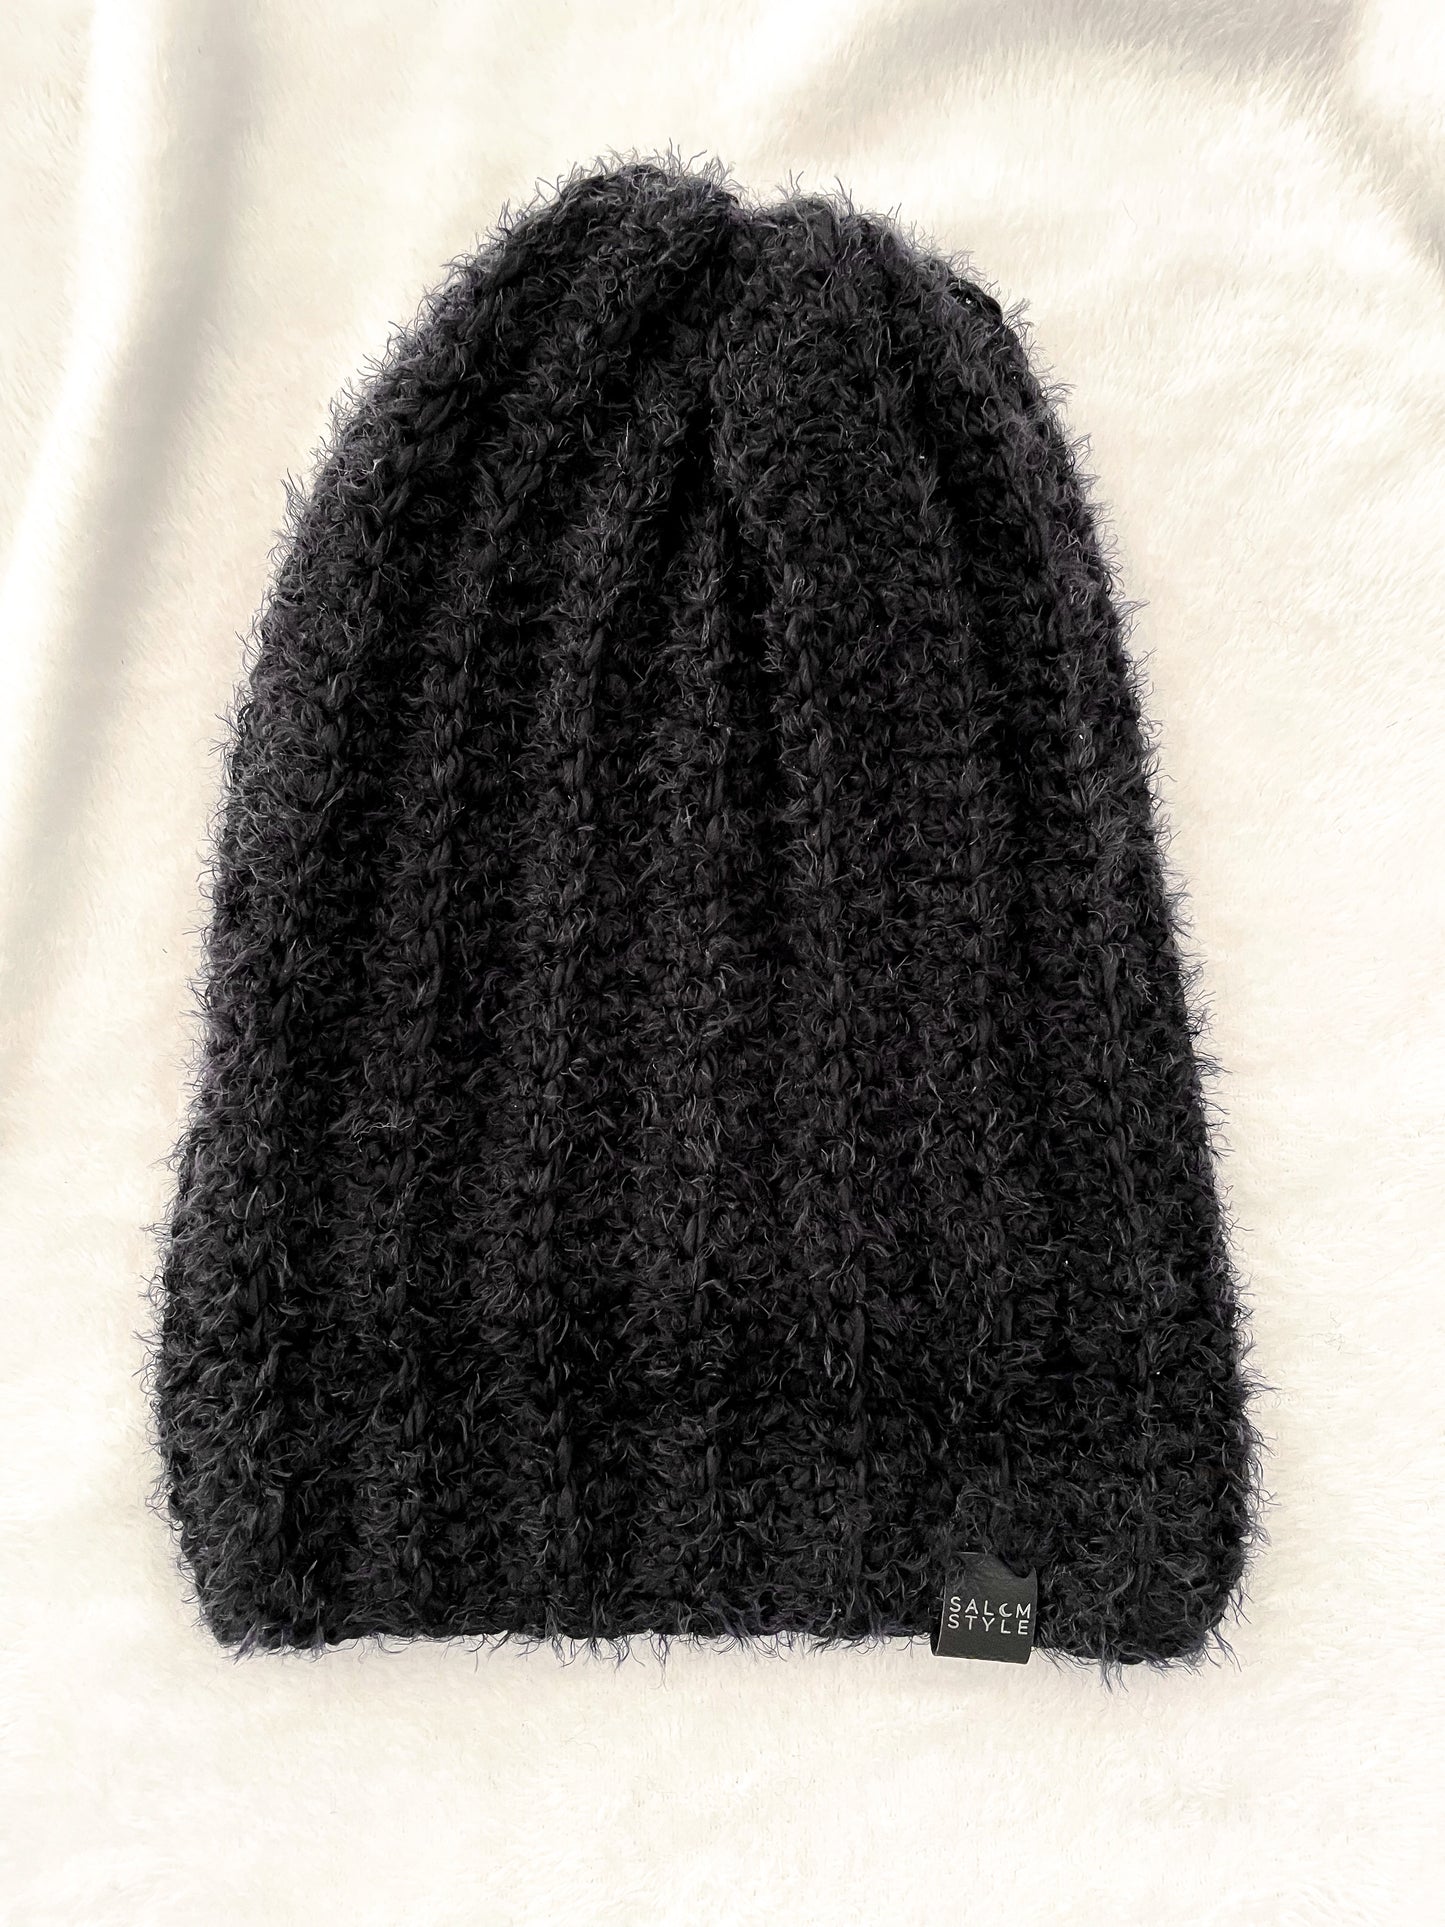 The Kernwood Hat in Black